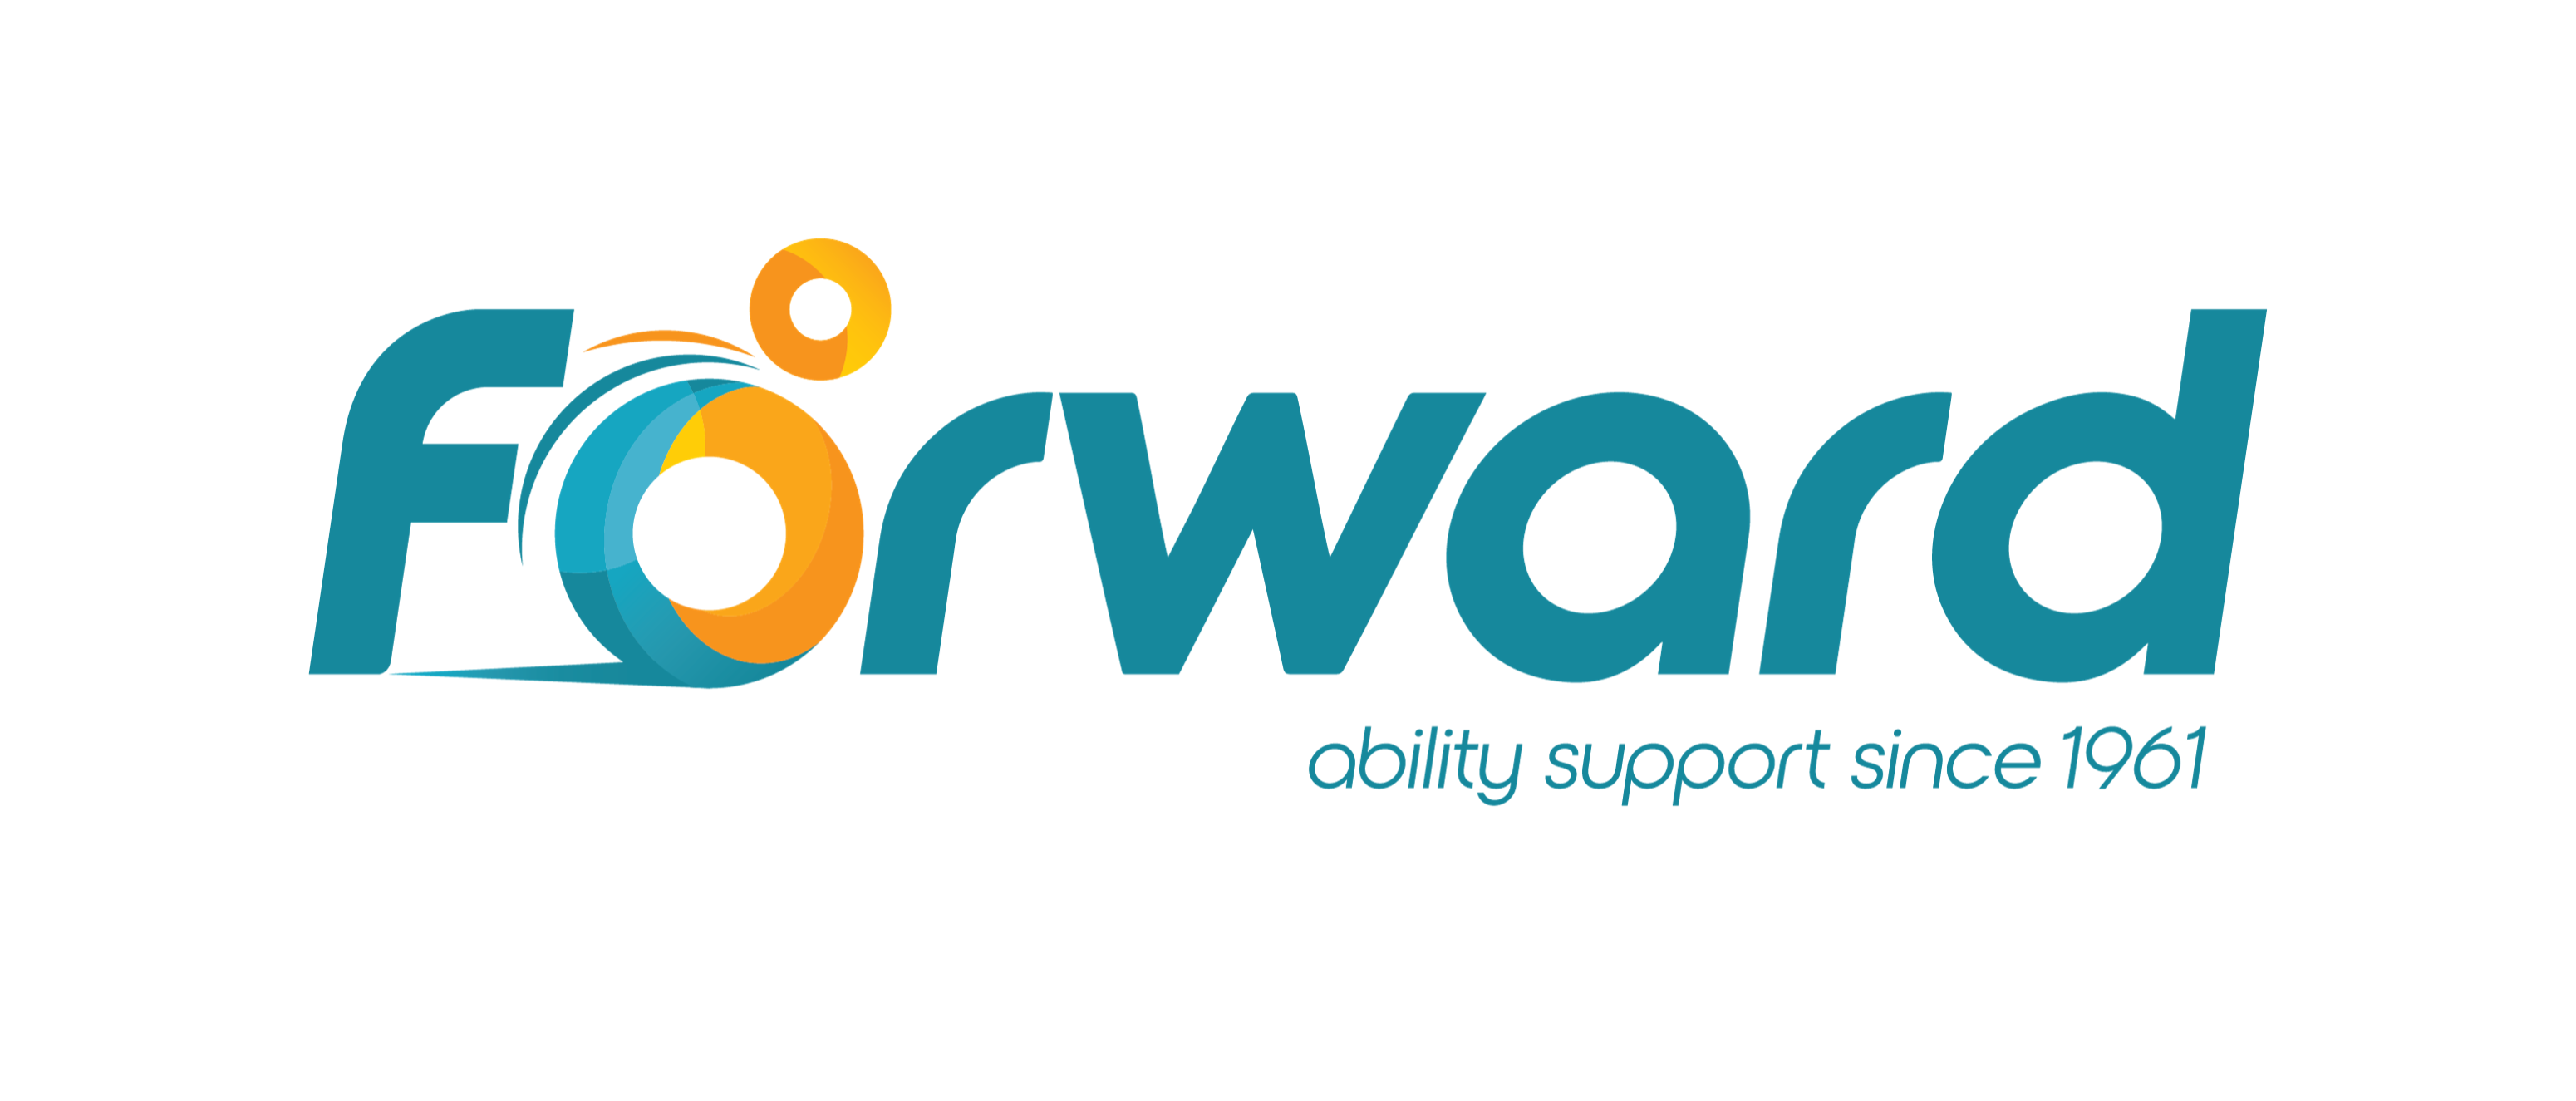 Forward ability logo - support since 1961